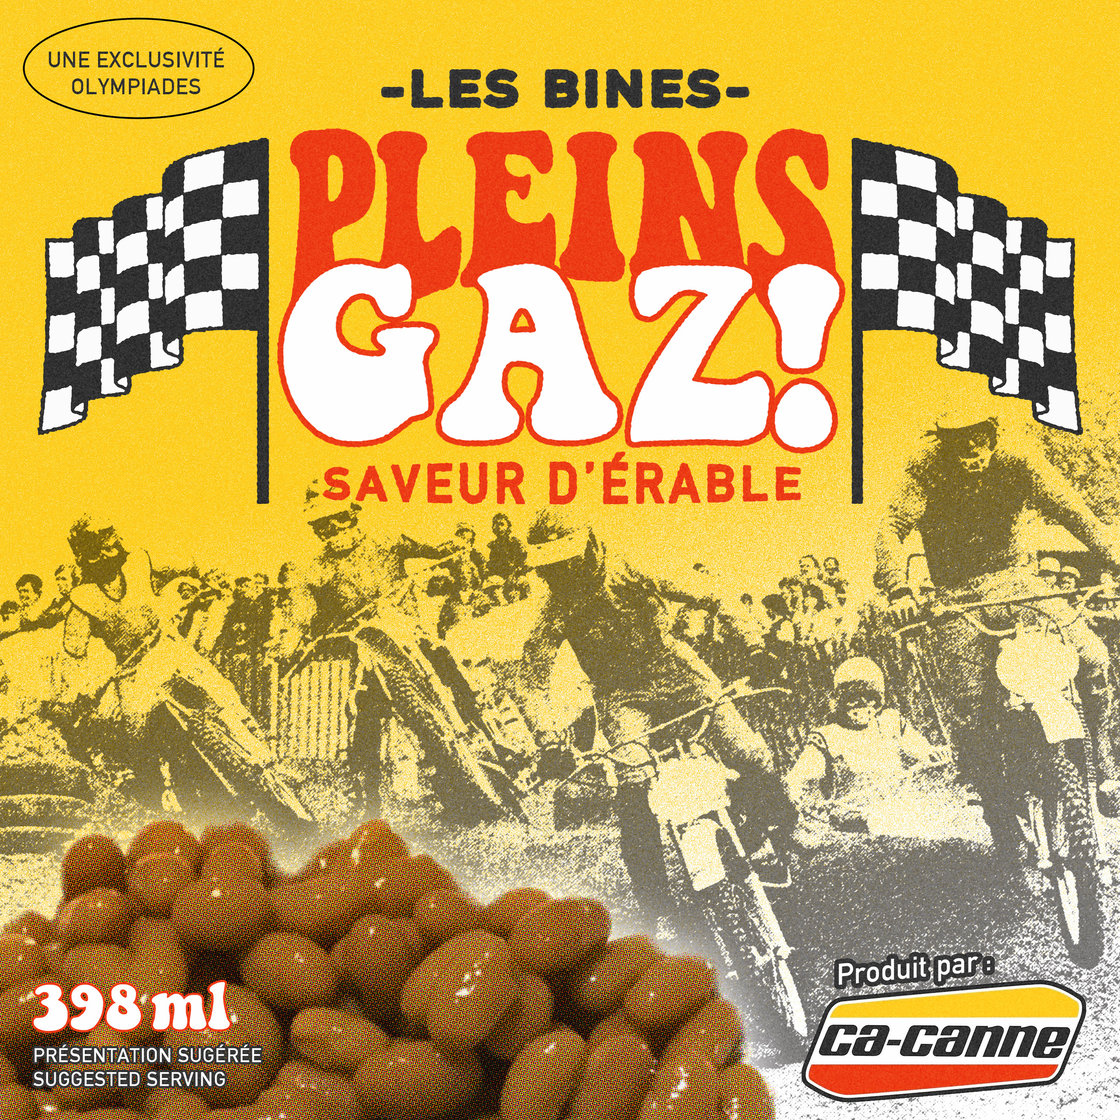 Image of CANNE DE BINES PLEINS GAZ!